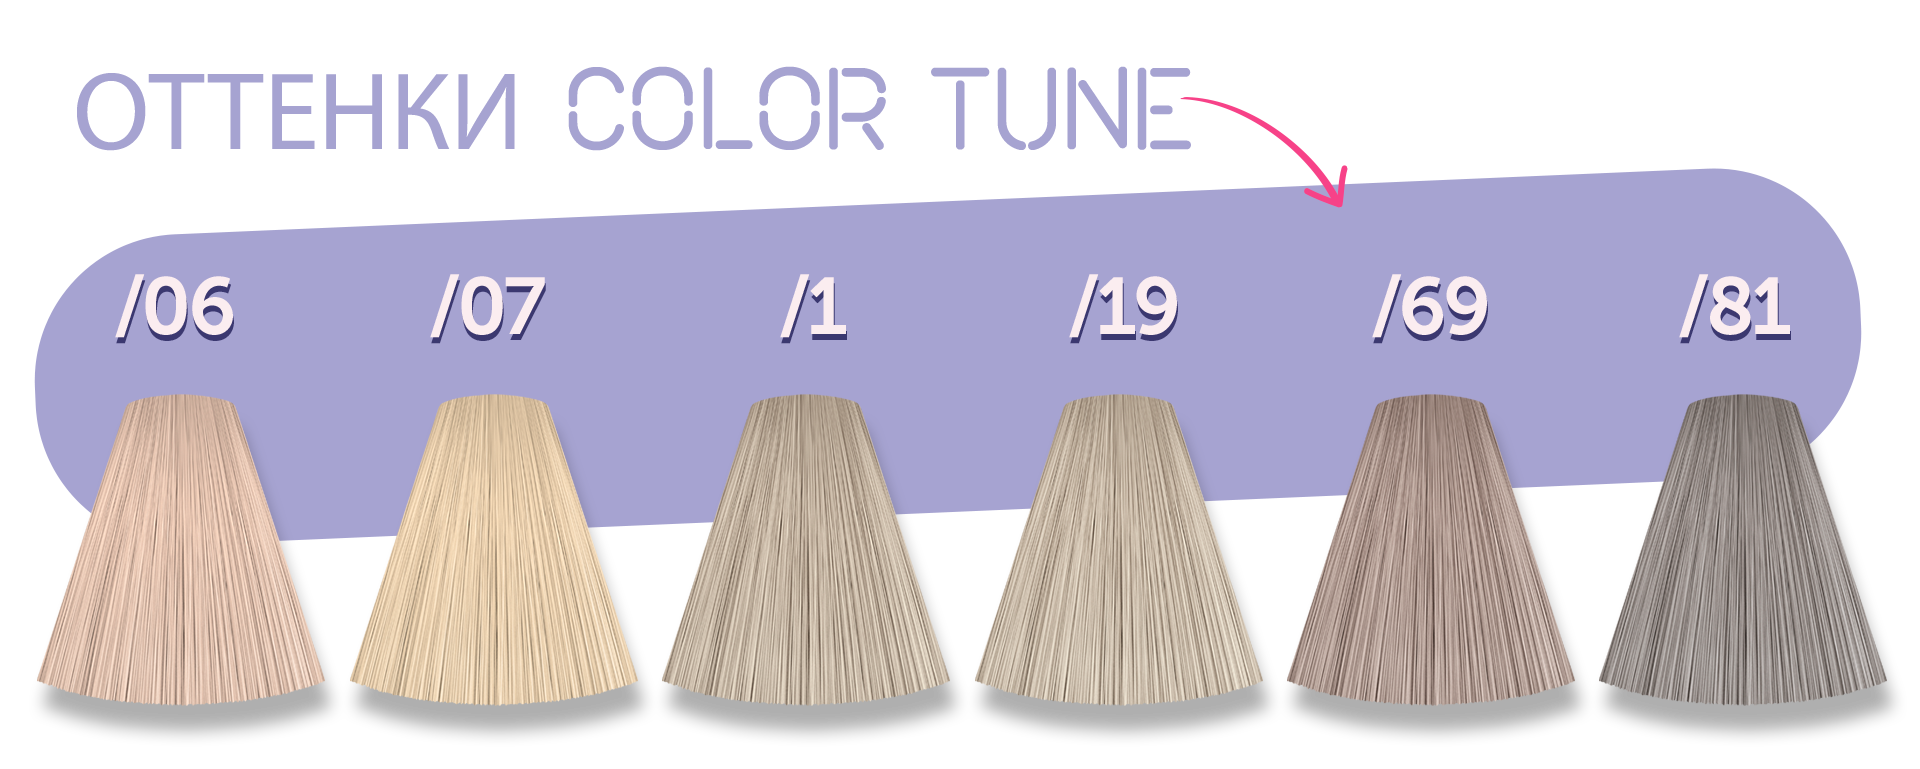 Color tune shades